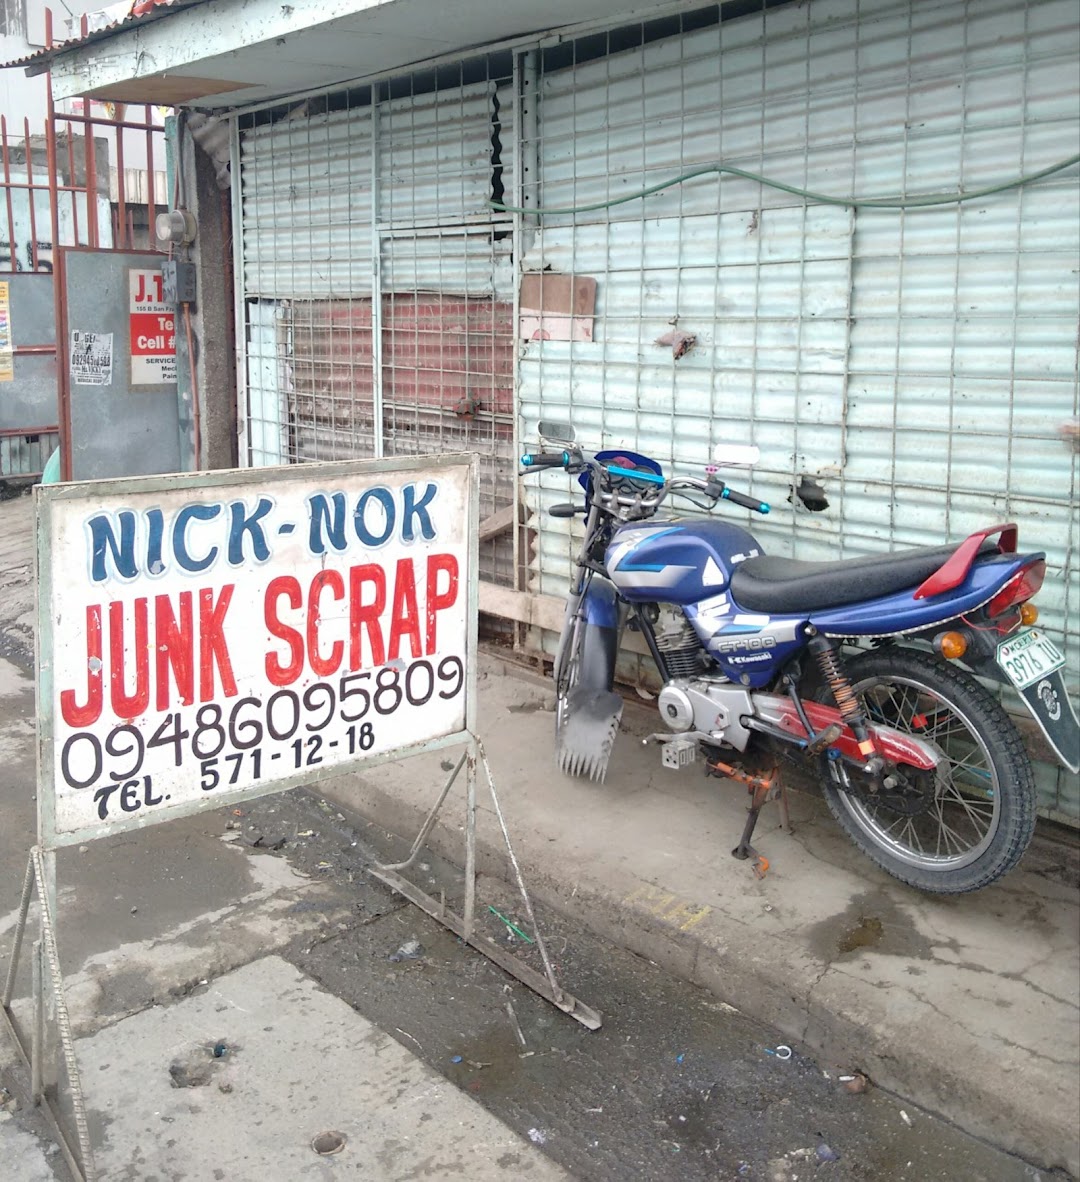 Nick-Nok Junk Scrap